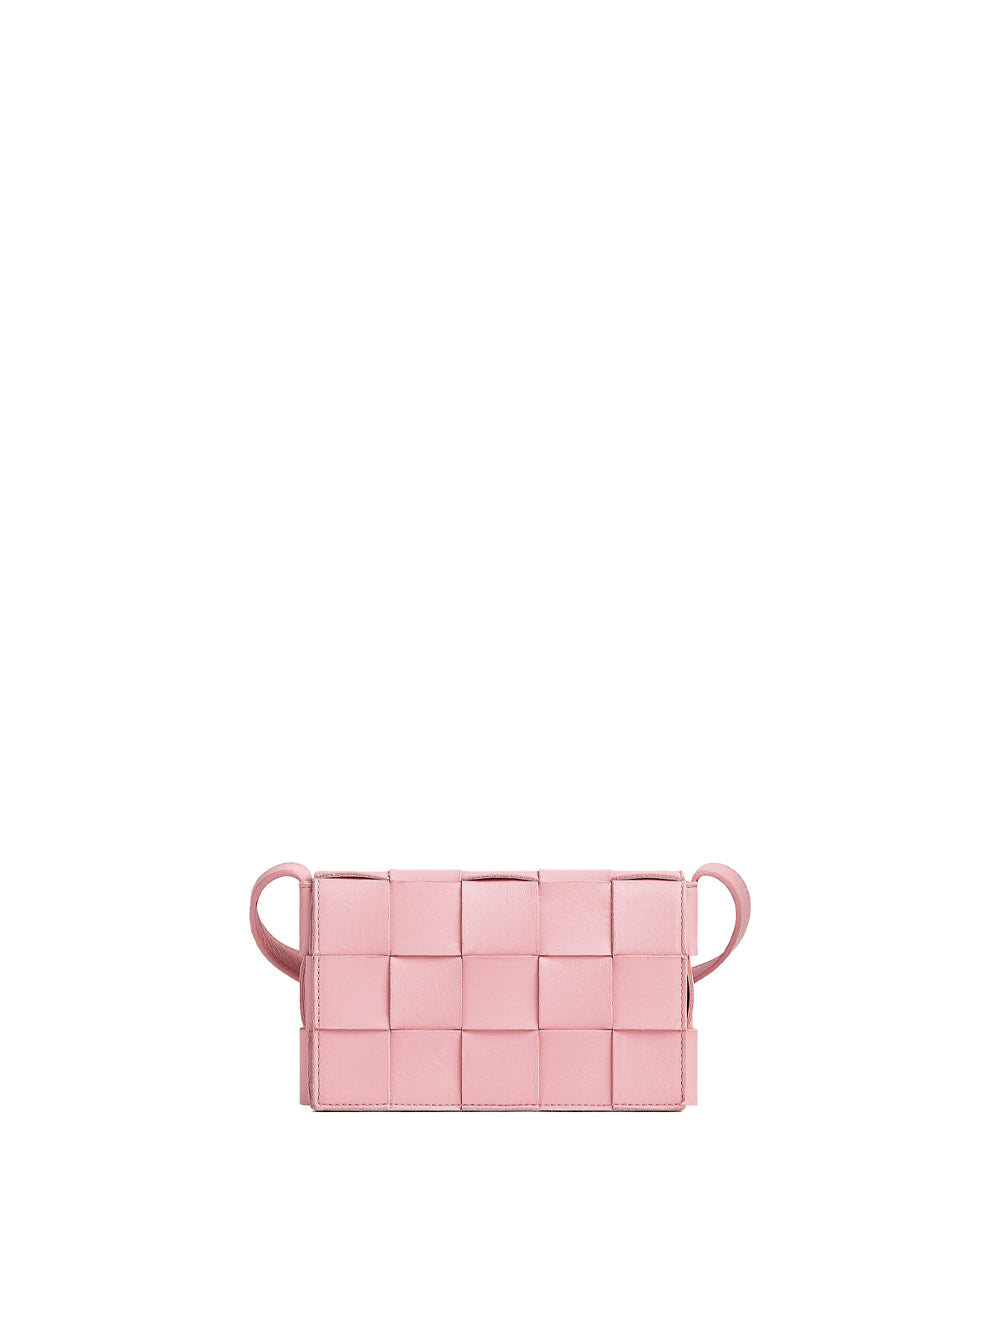 Bottega Veneta Women's Small Intrecciato Cassette Crossbody Bag in Pink